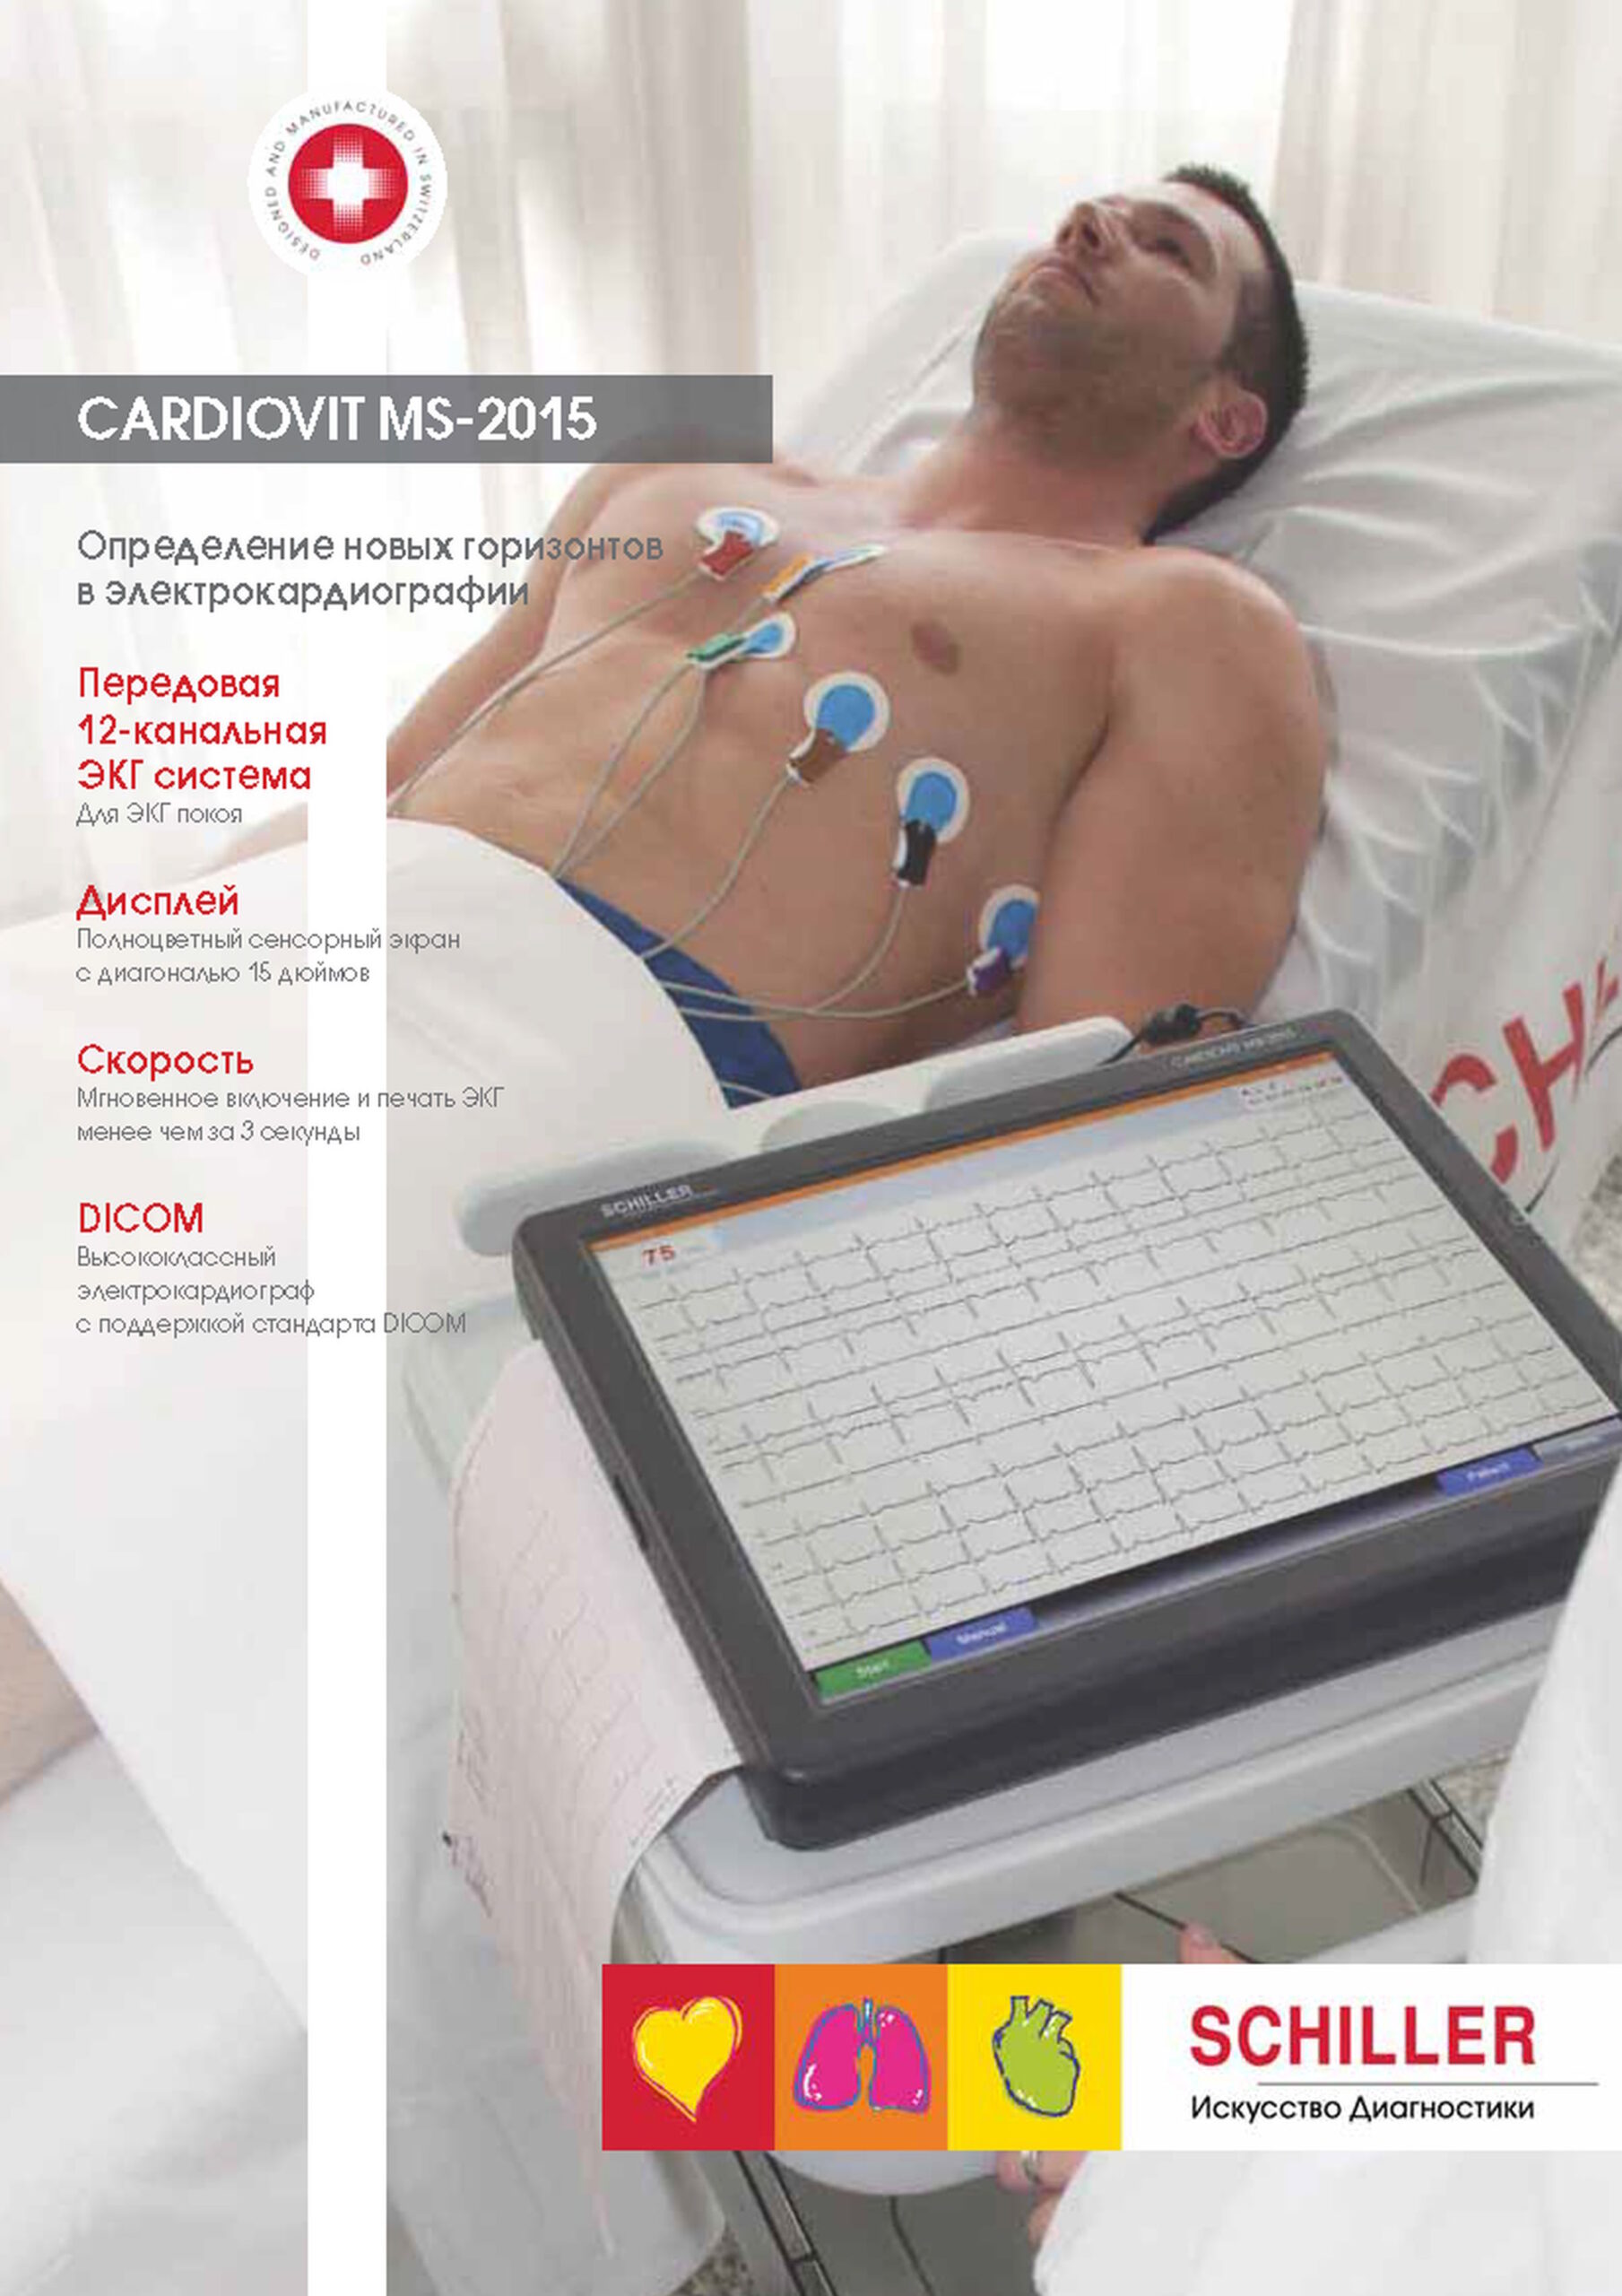 CARDIOVIT MS-2015